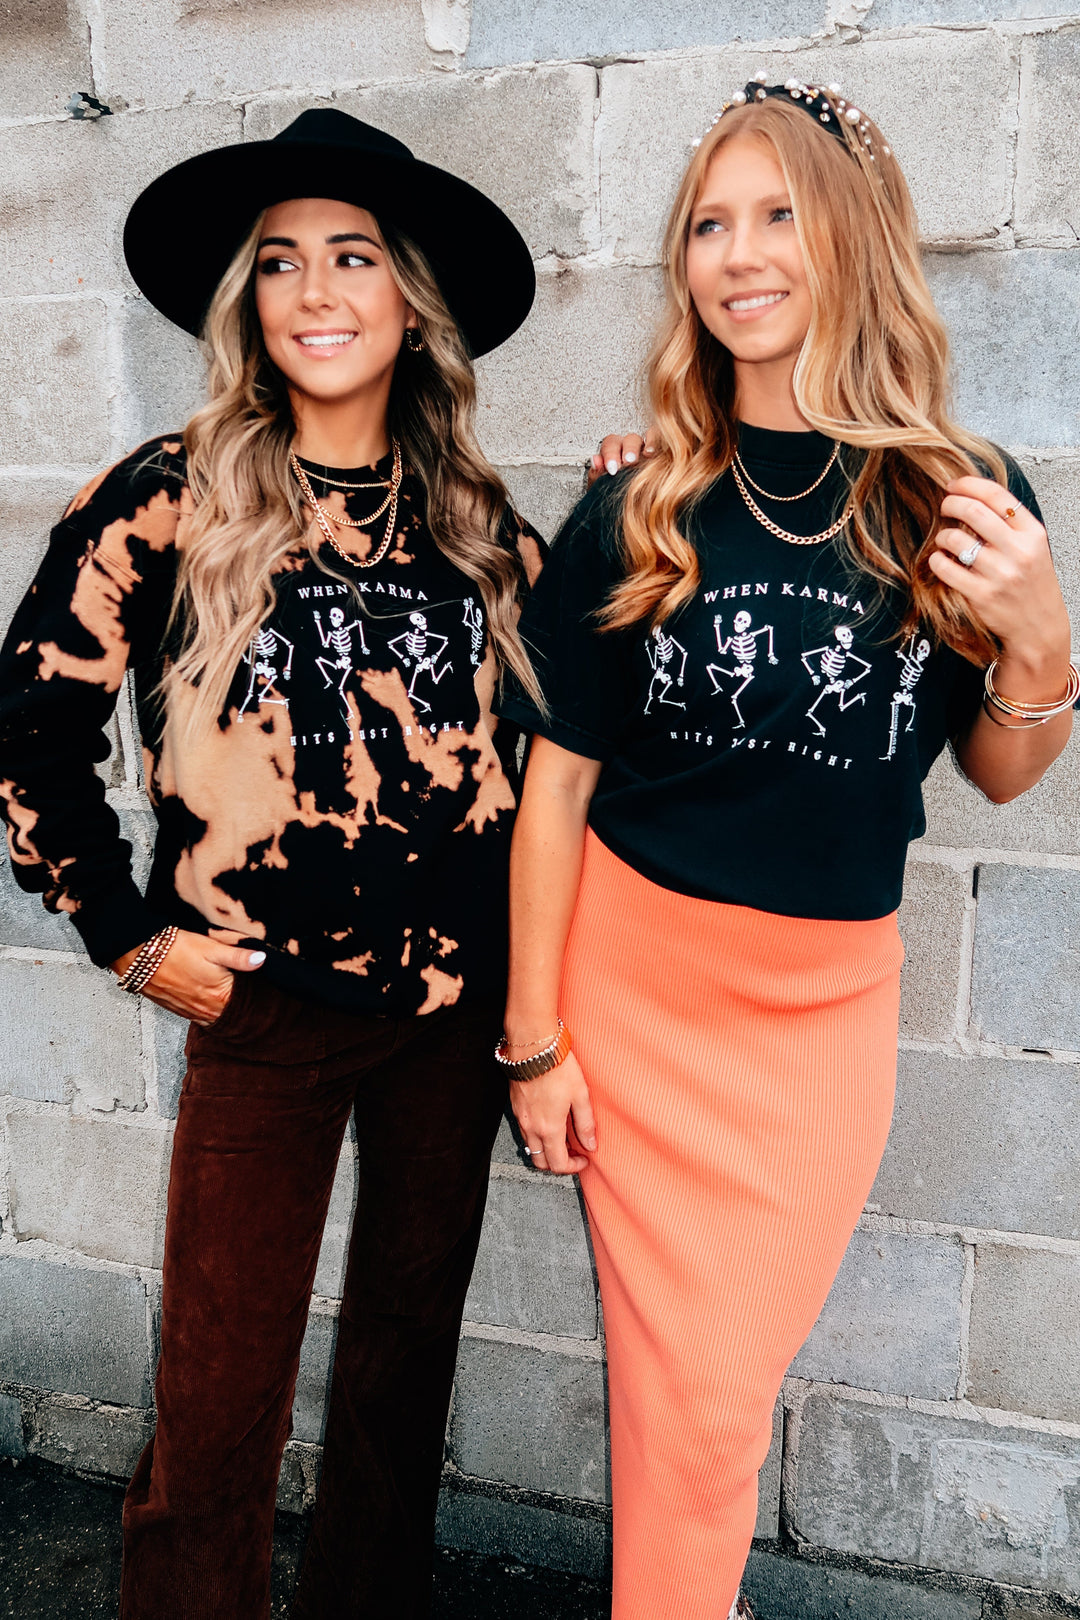 Karma Black Bomba Sweatshirt-Graphic Tees-Krush Kandy, Women's Online Fashion Boutique Located in Phoenix, Arizona (Scottsdale Area)